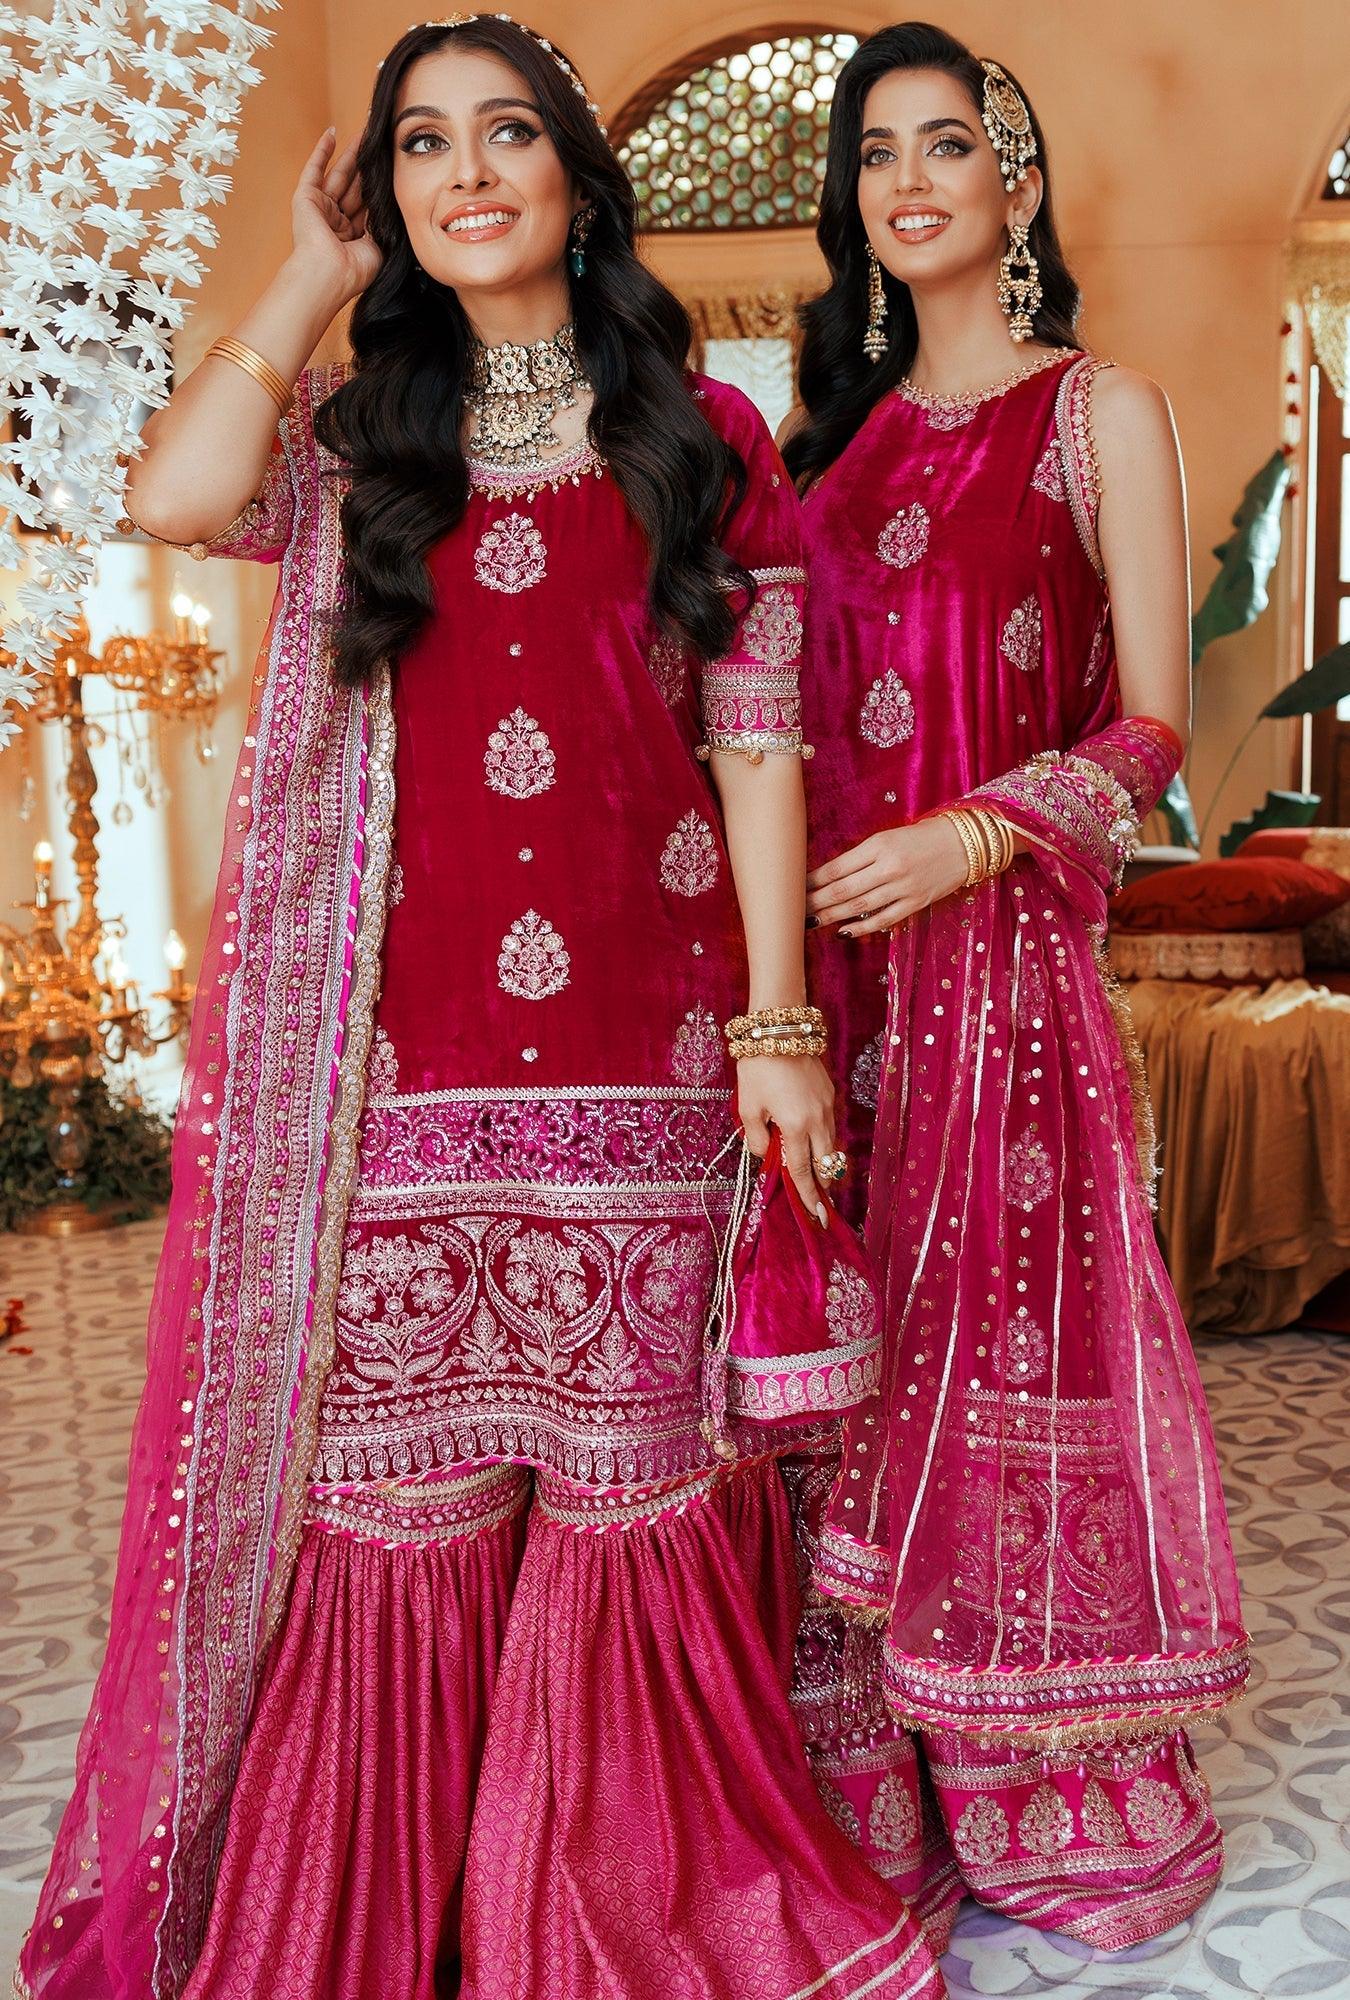 Miran 01 - Noor Wedding Collection 2022 - Miran 01 - Noor Wedding Collection 2022 - Shahana Collection